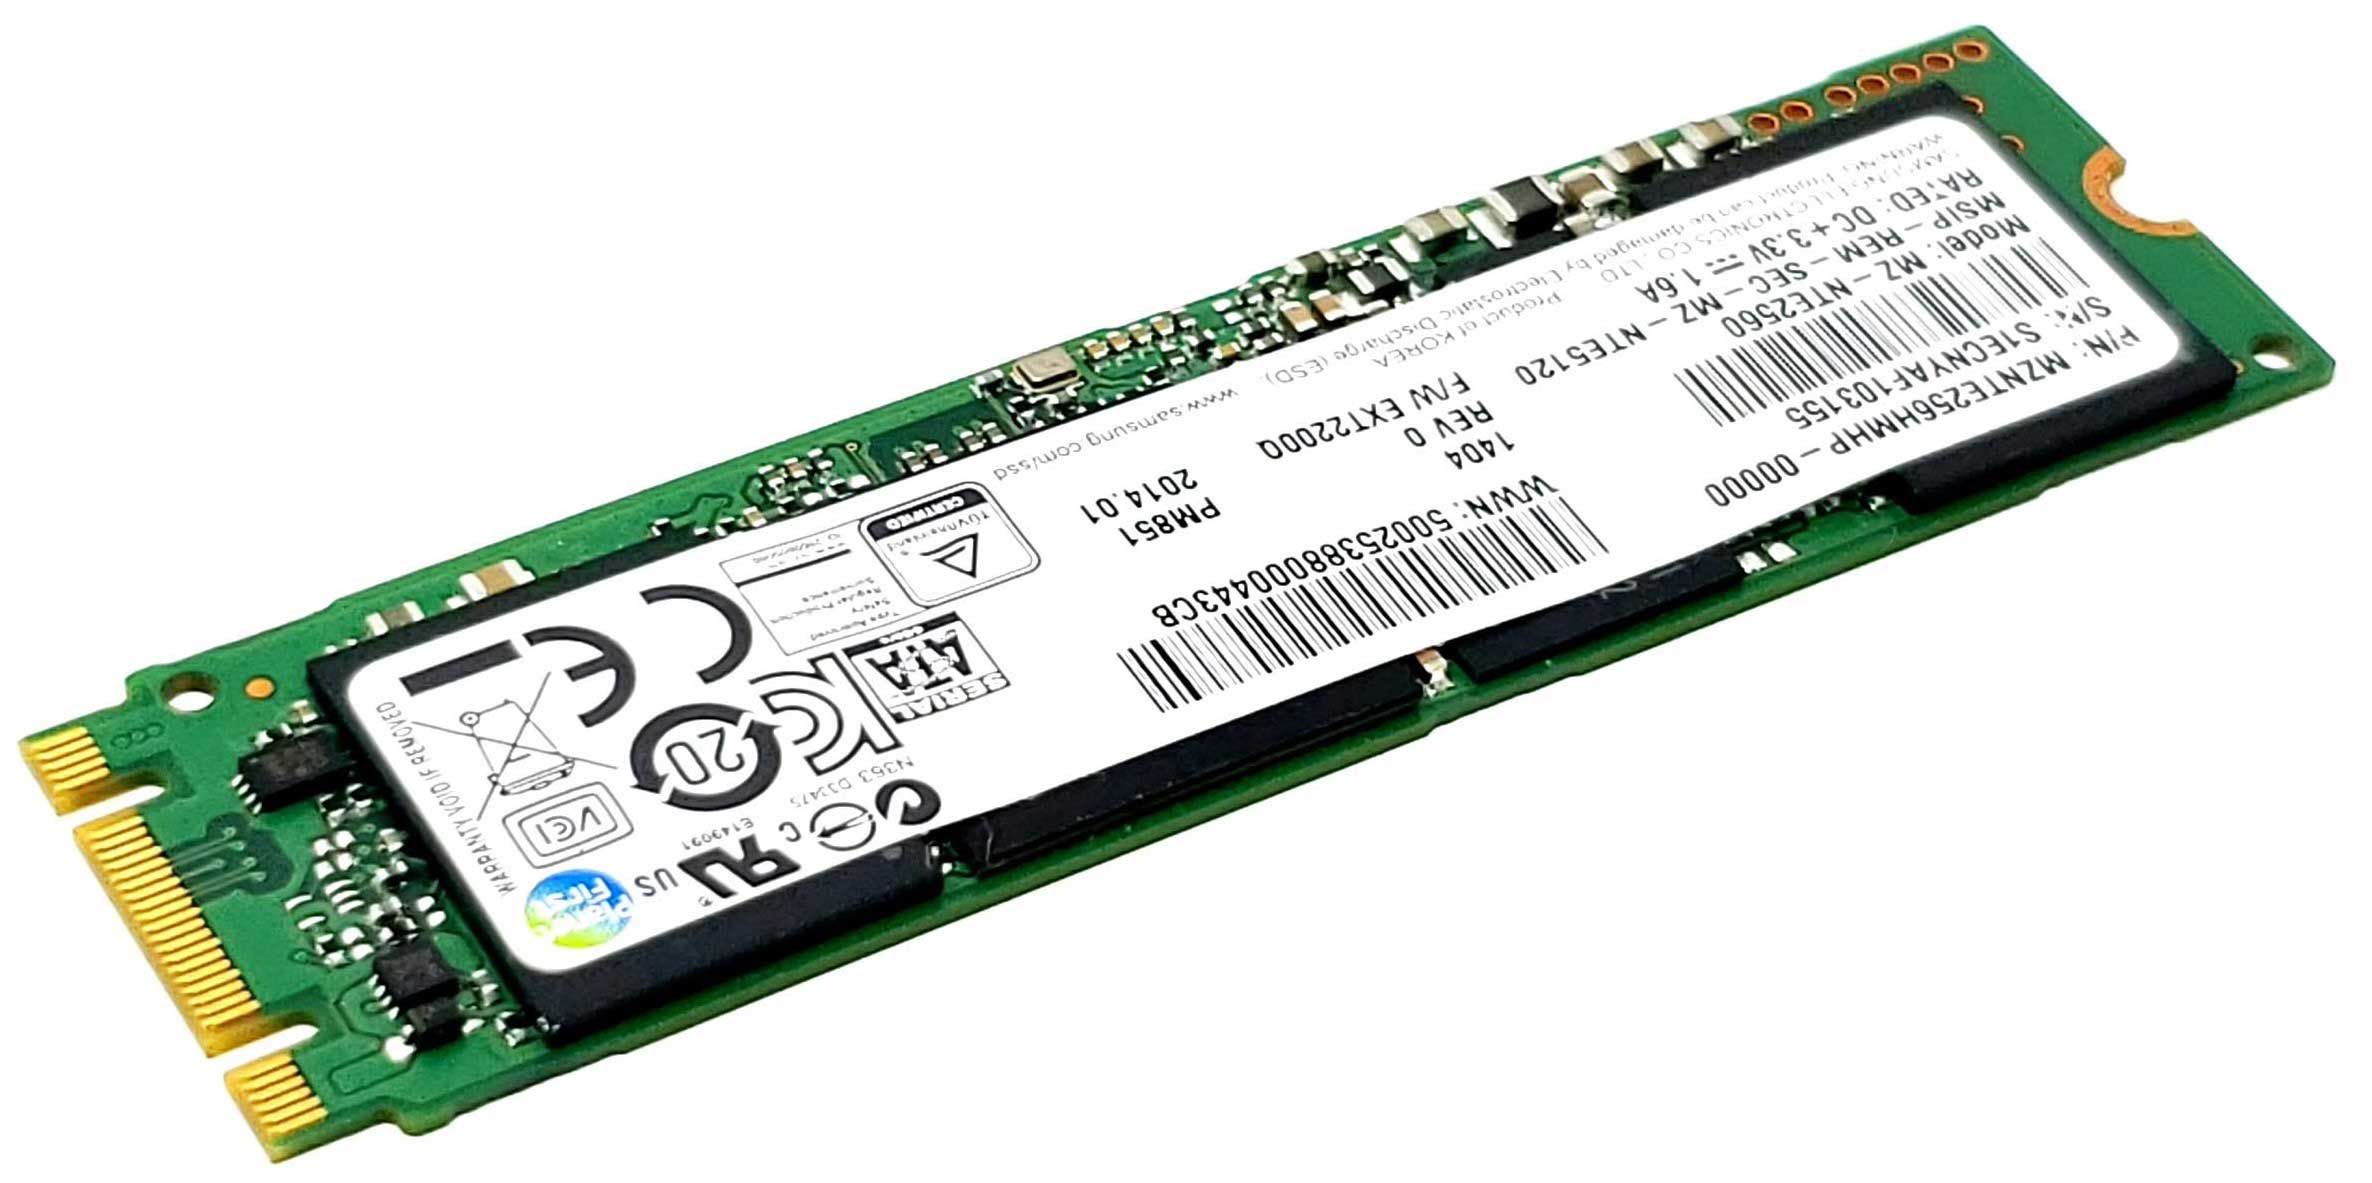 Kingspec NT-256 - 256GB M.2 2280 SATA III NGFF Solid State SSD